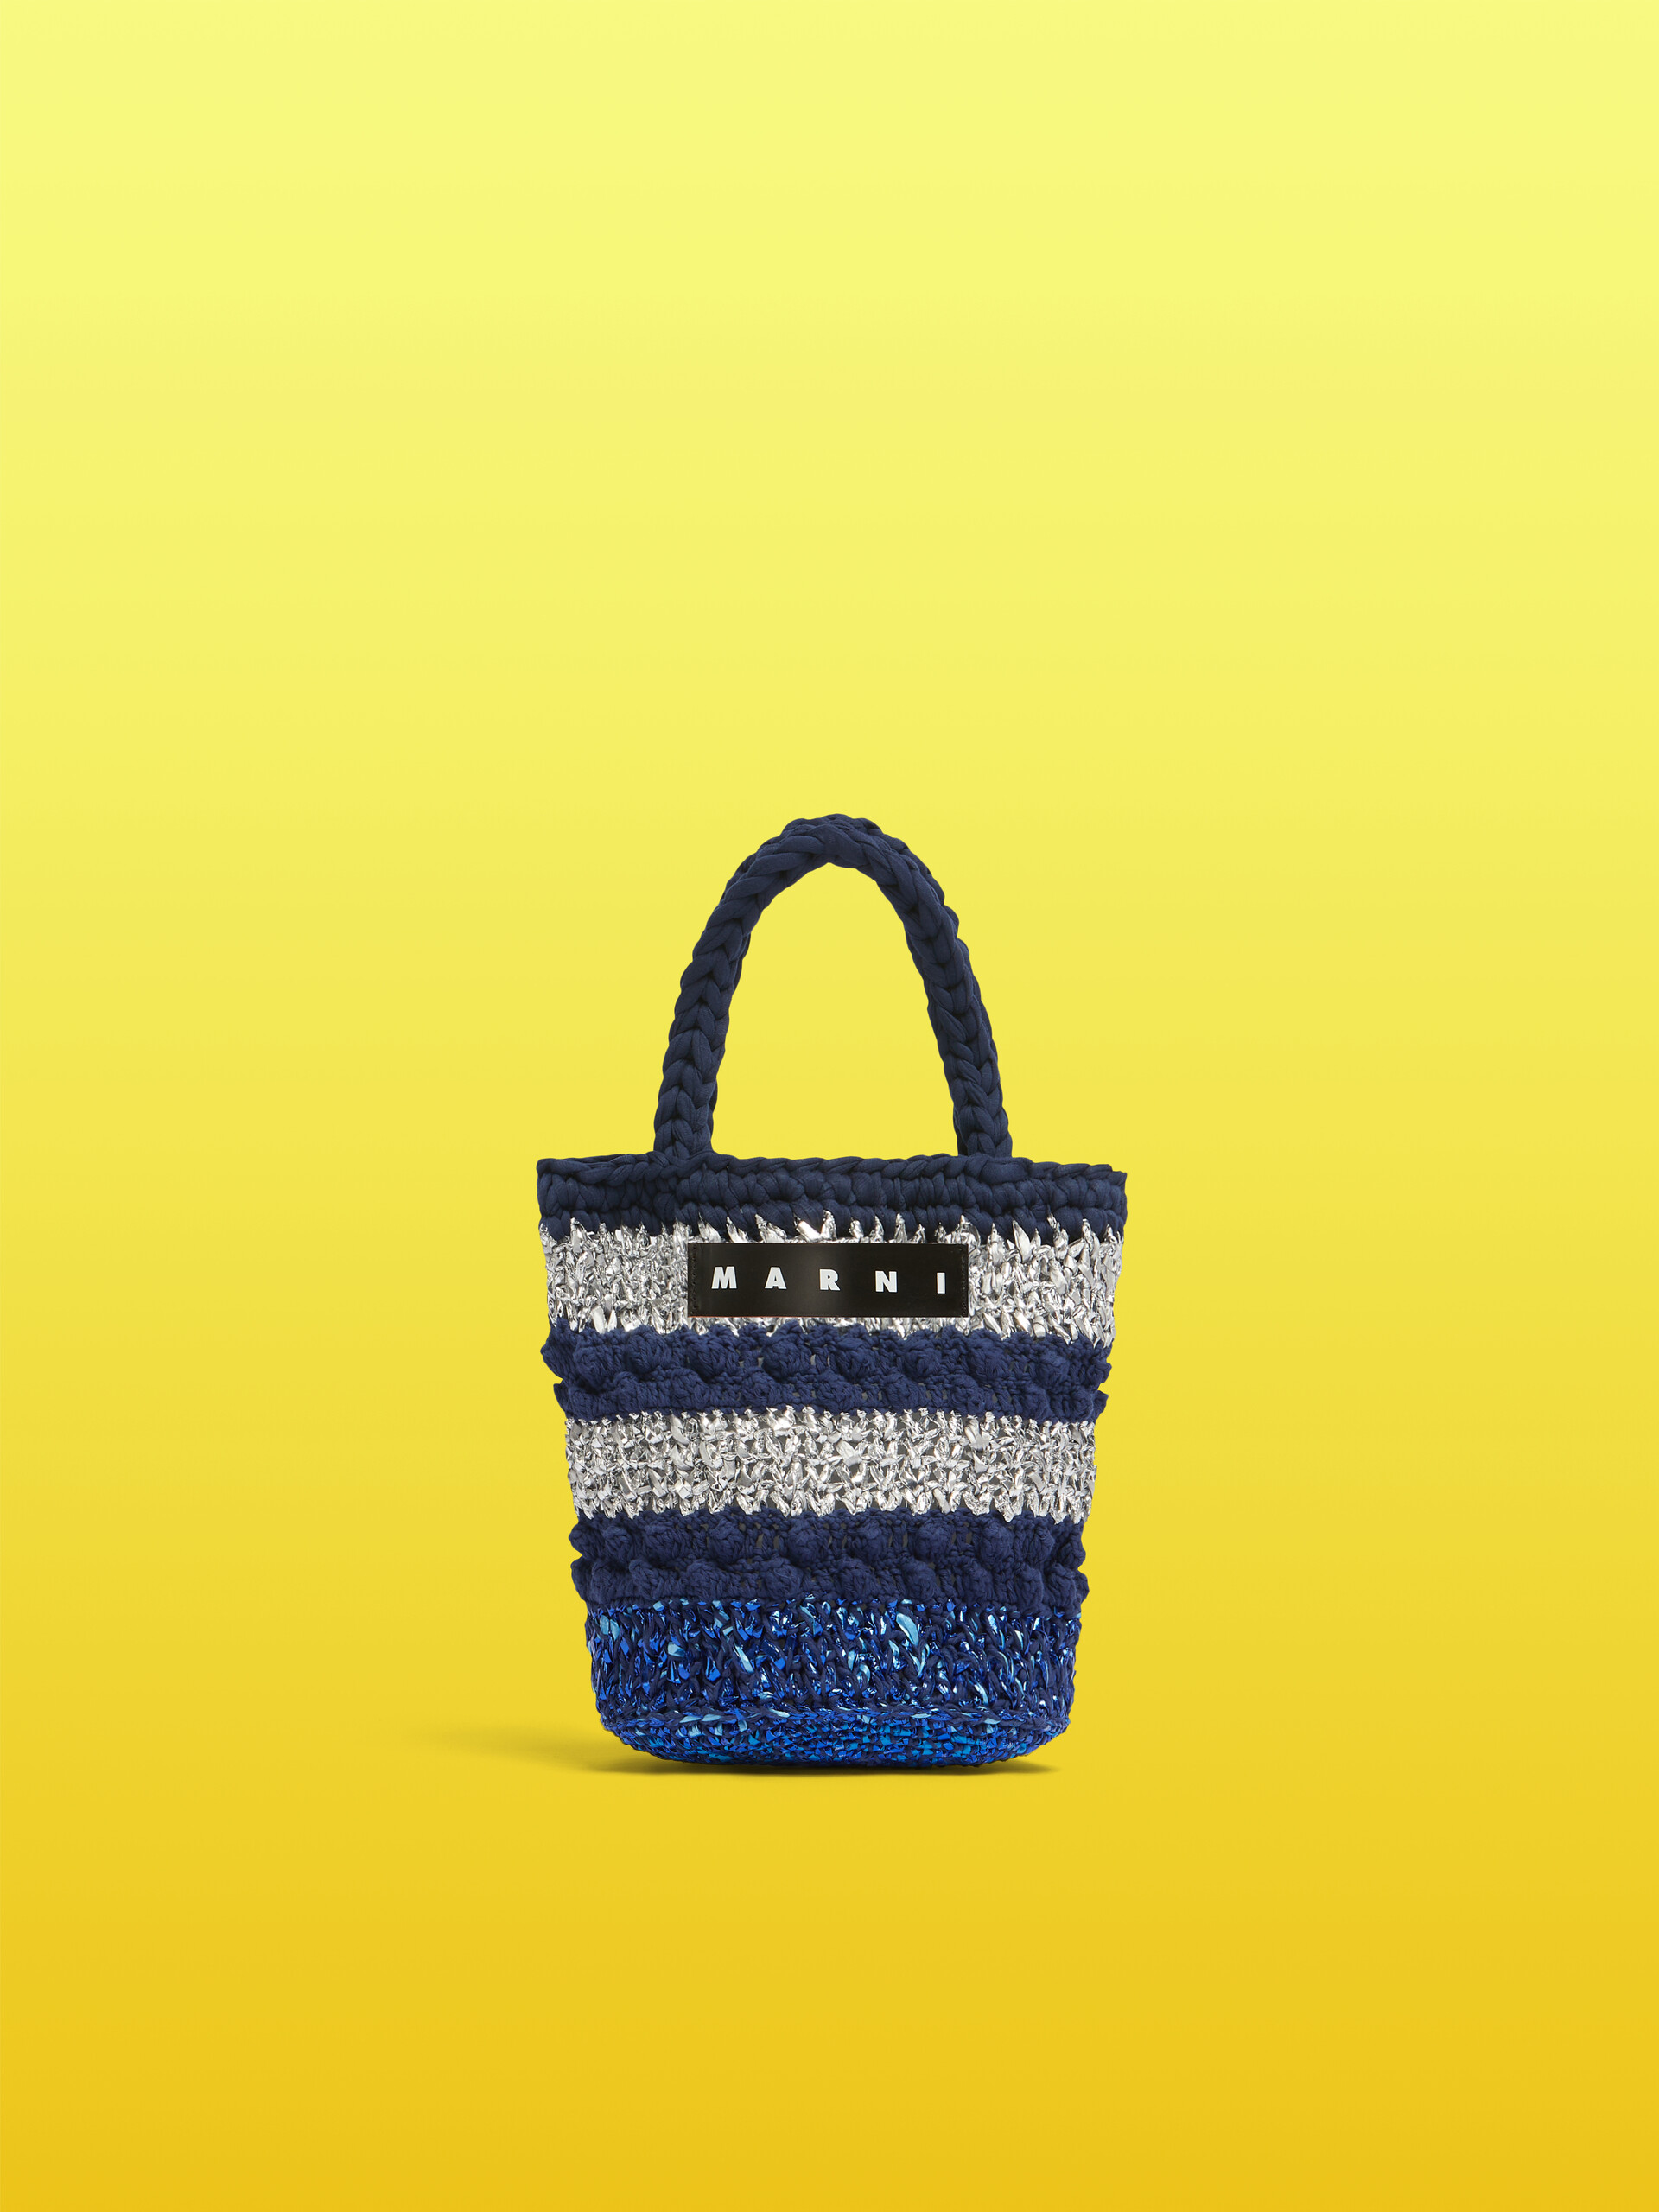 Deep blue and silver bobble-knit MARNI MARKET BUCKET bag - Shopping Bags - Image 1